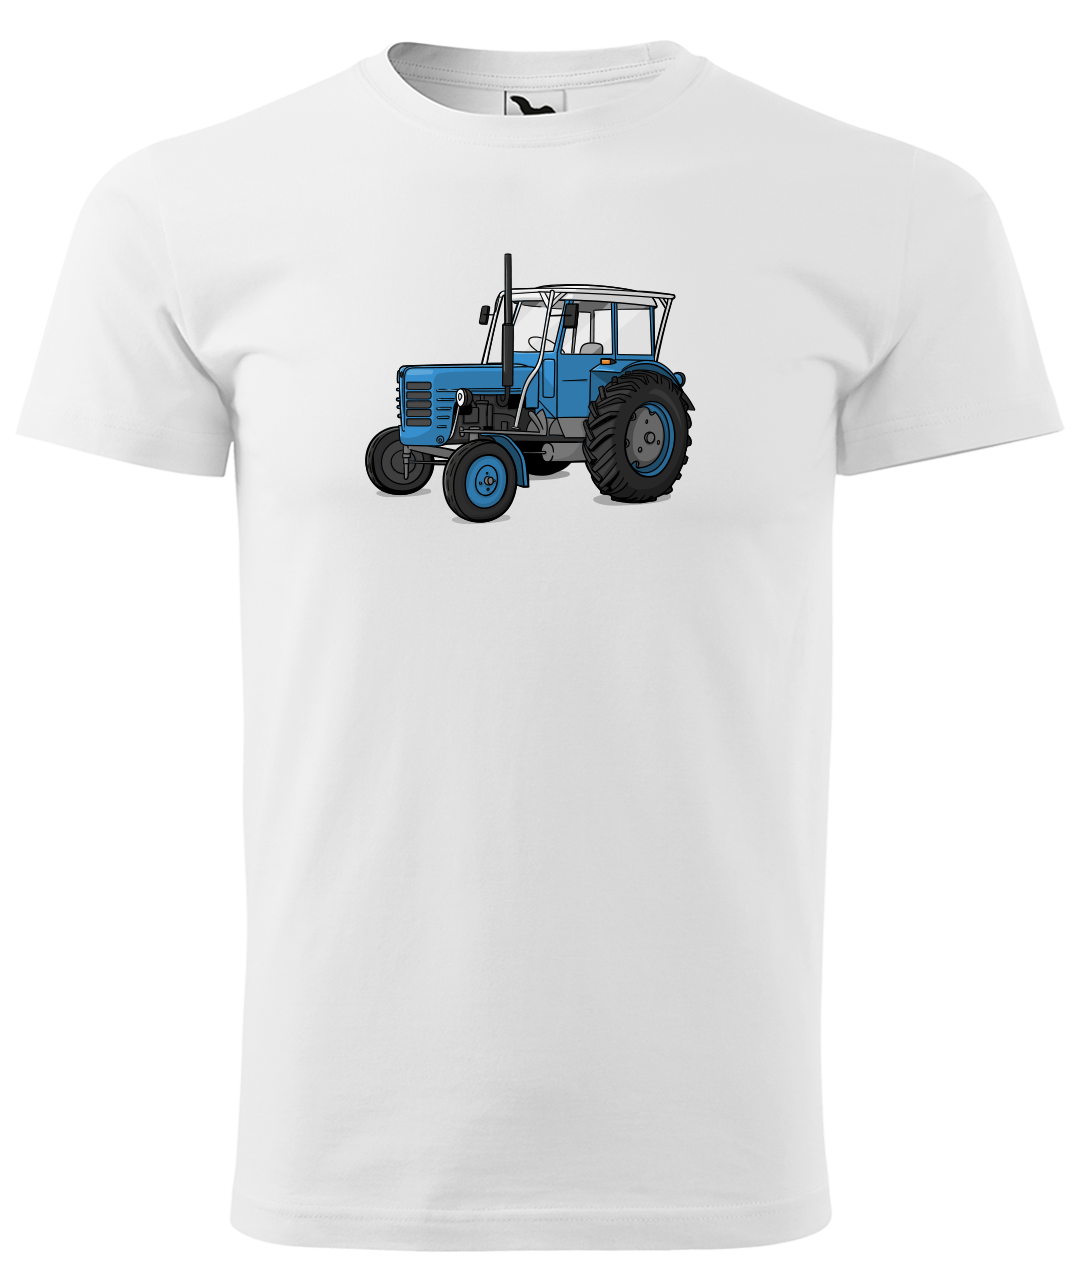 Dětské tričko s traktorem - Starý traktor Velikost: 6 let / 122 cm, Barva: Bílá (00)